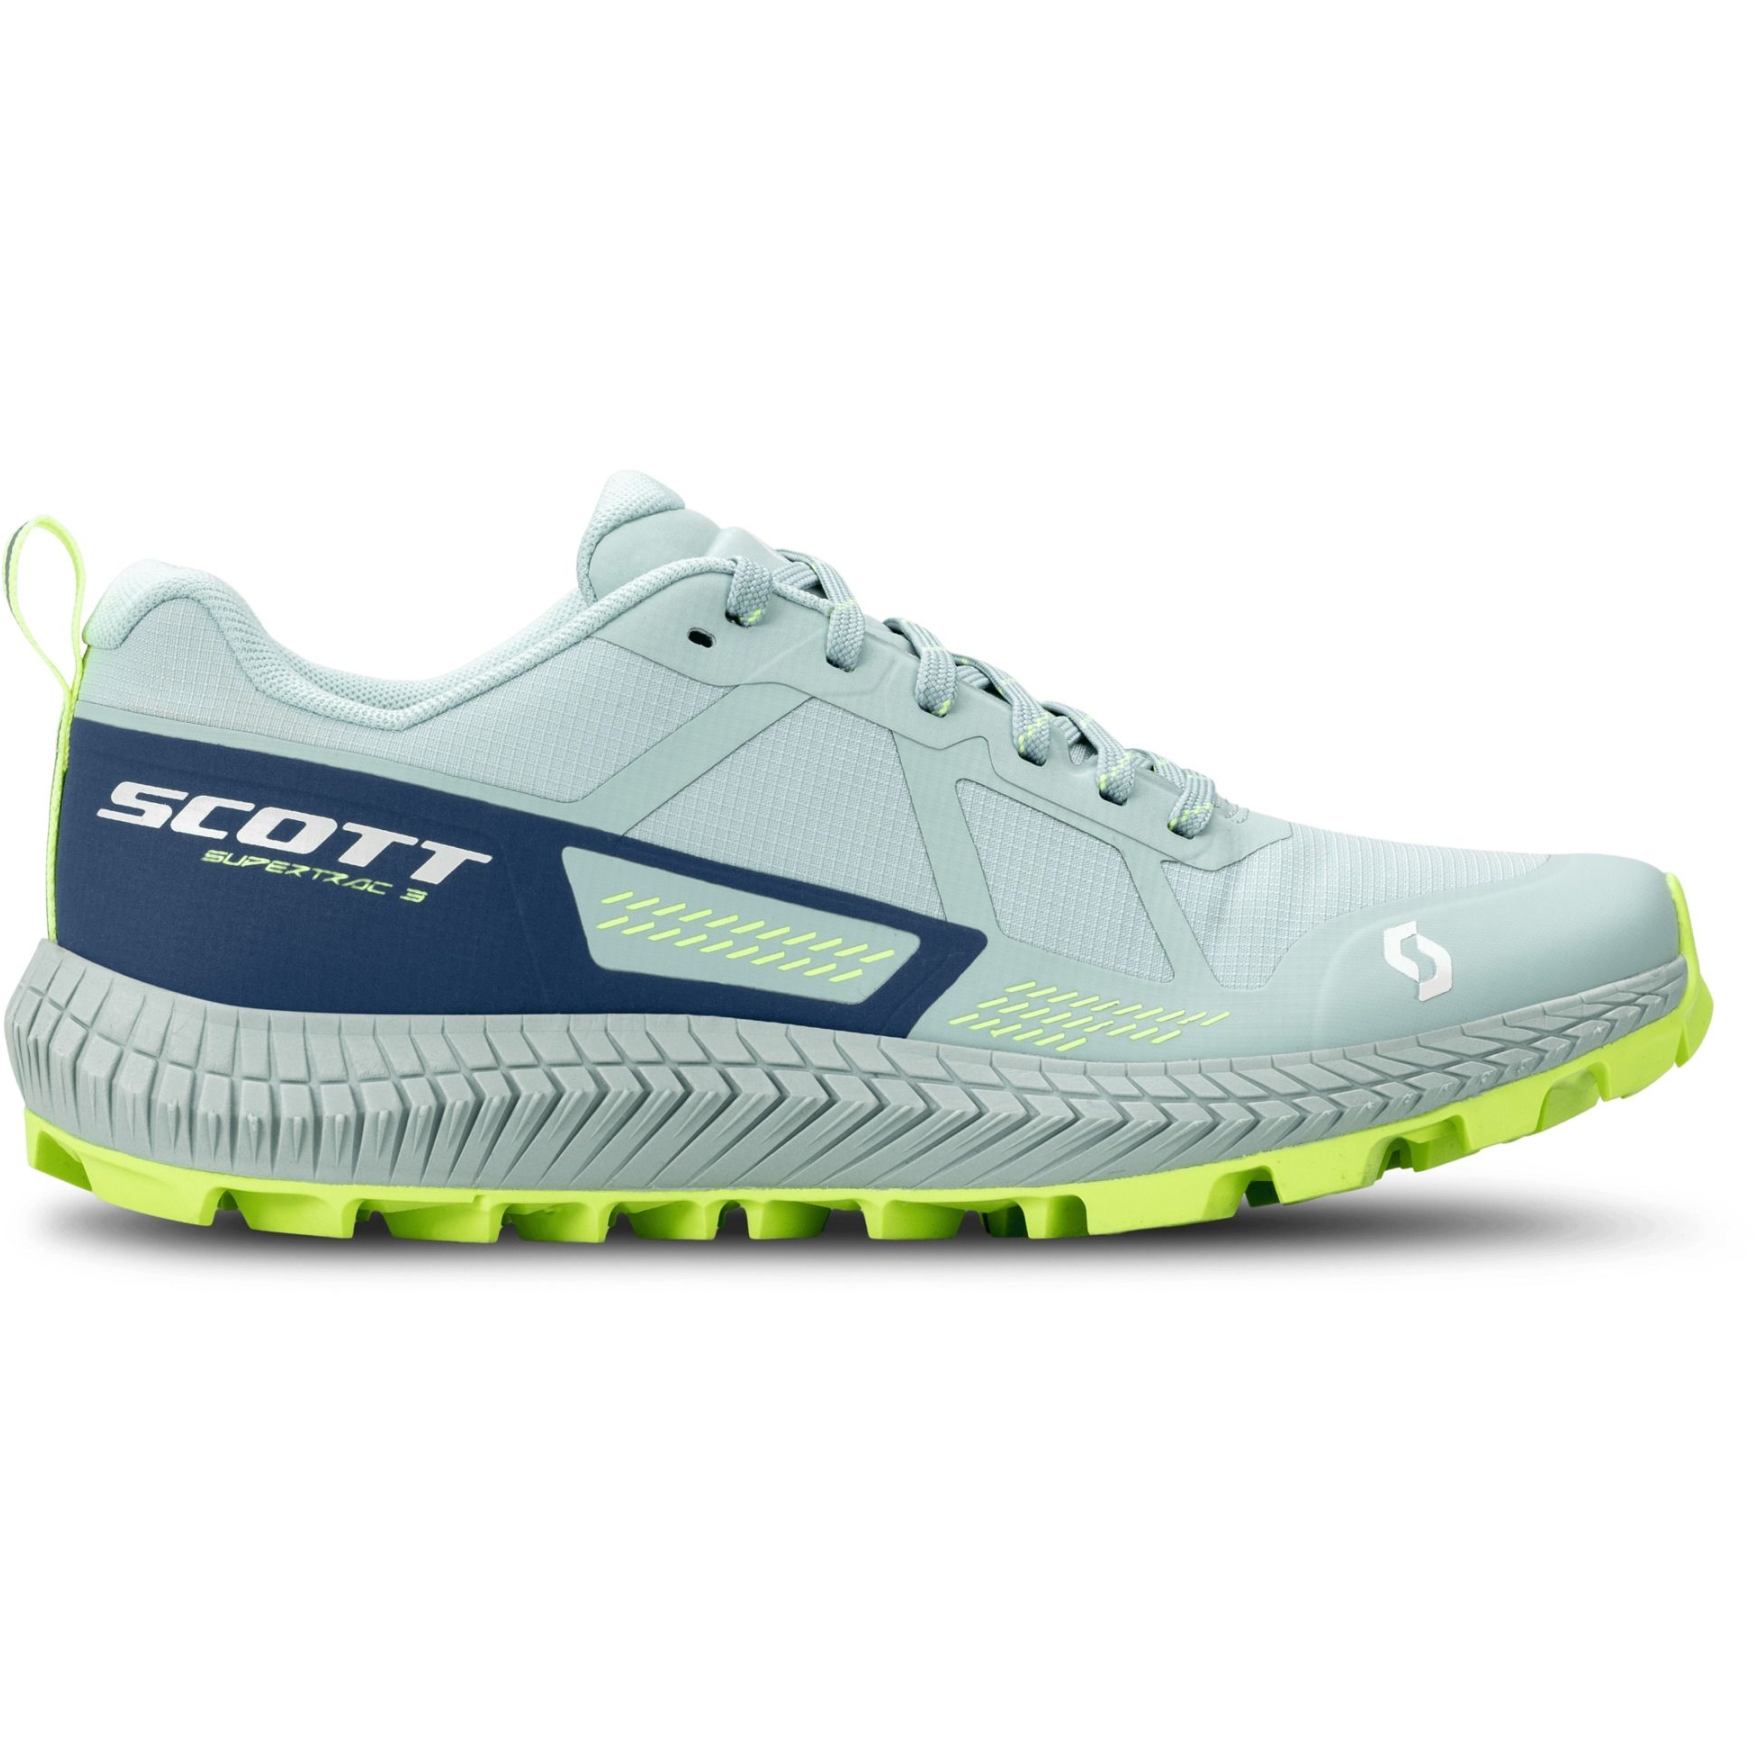 Produktbild von SCOTT Supertrac 3 Laufschuhe Damen - fresh green/metal blue